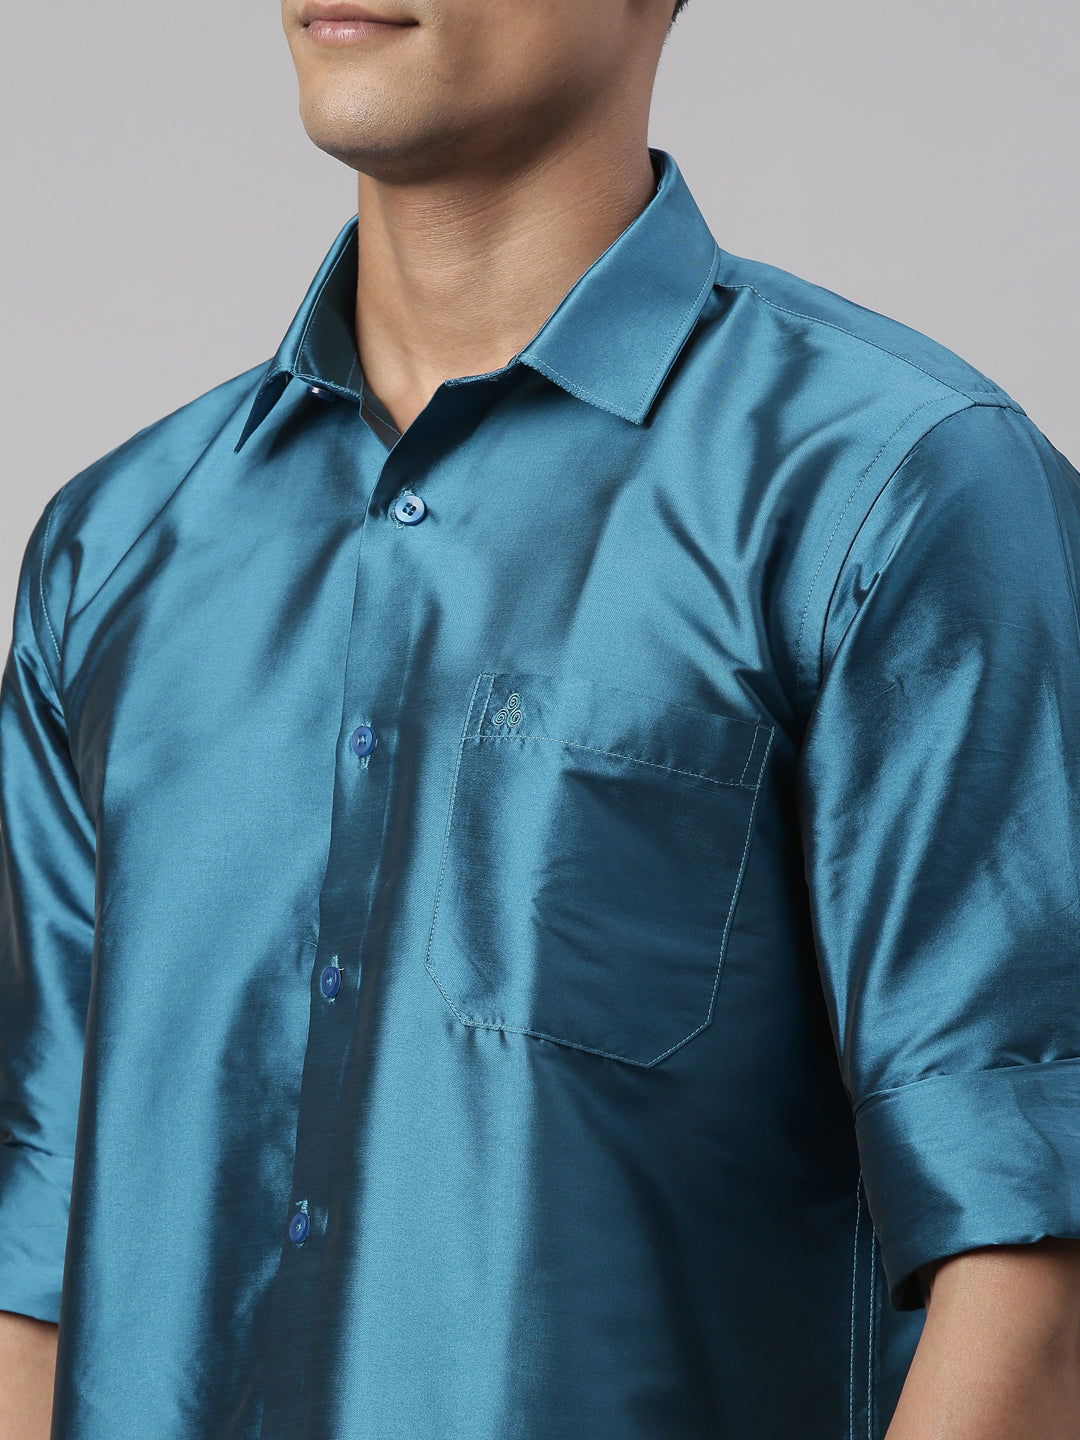 Tattva Mens Blue Colour Solid Party Shirt